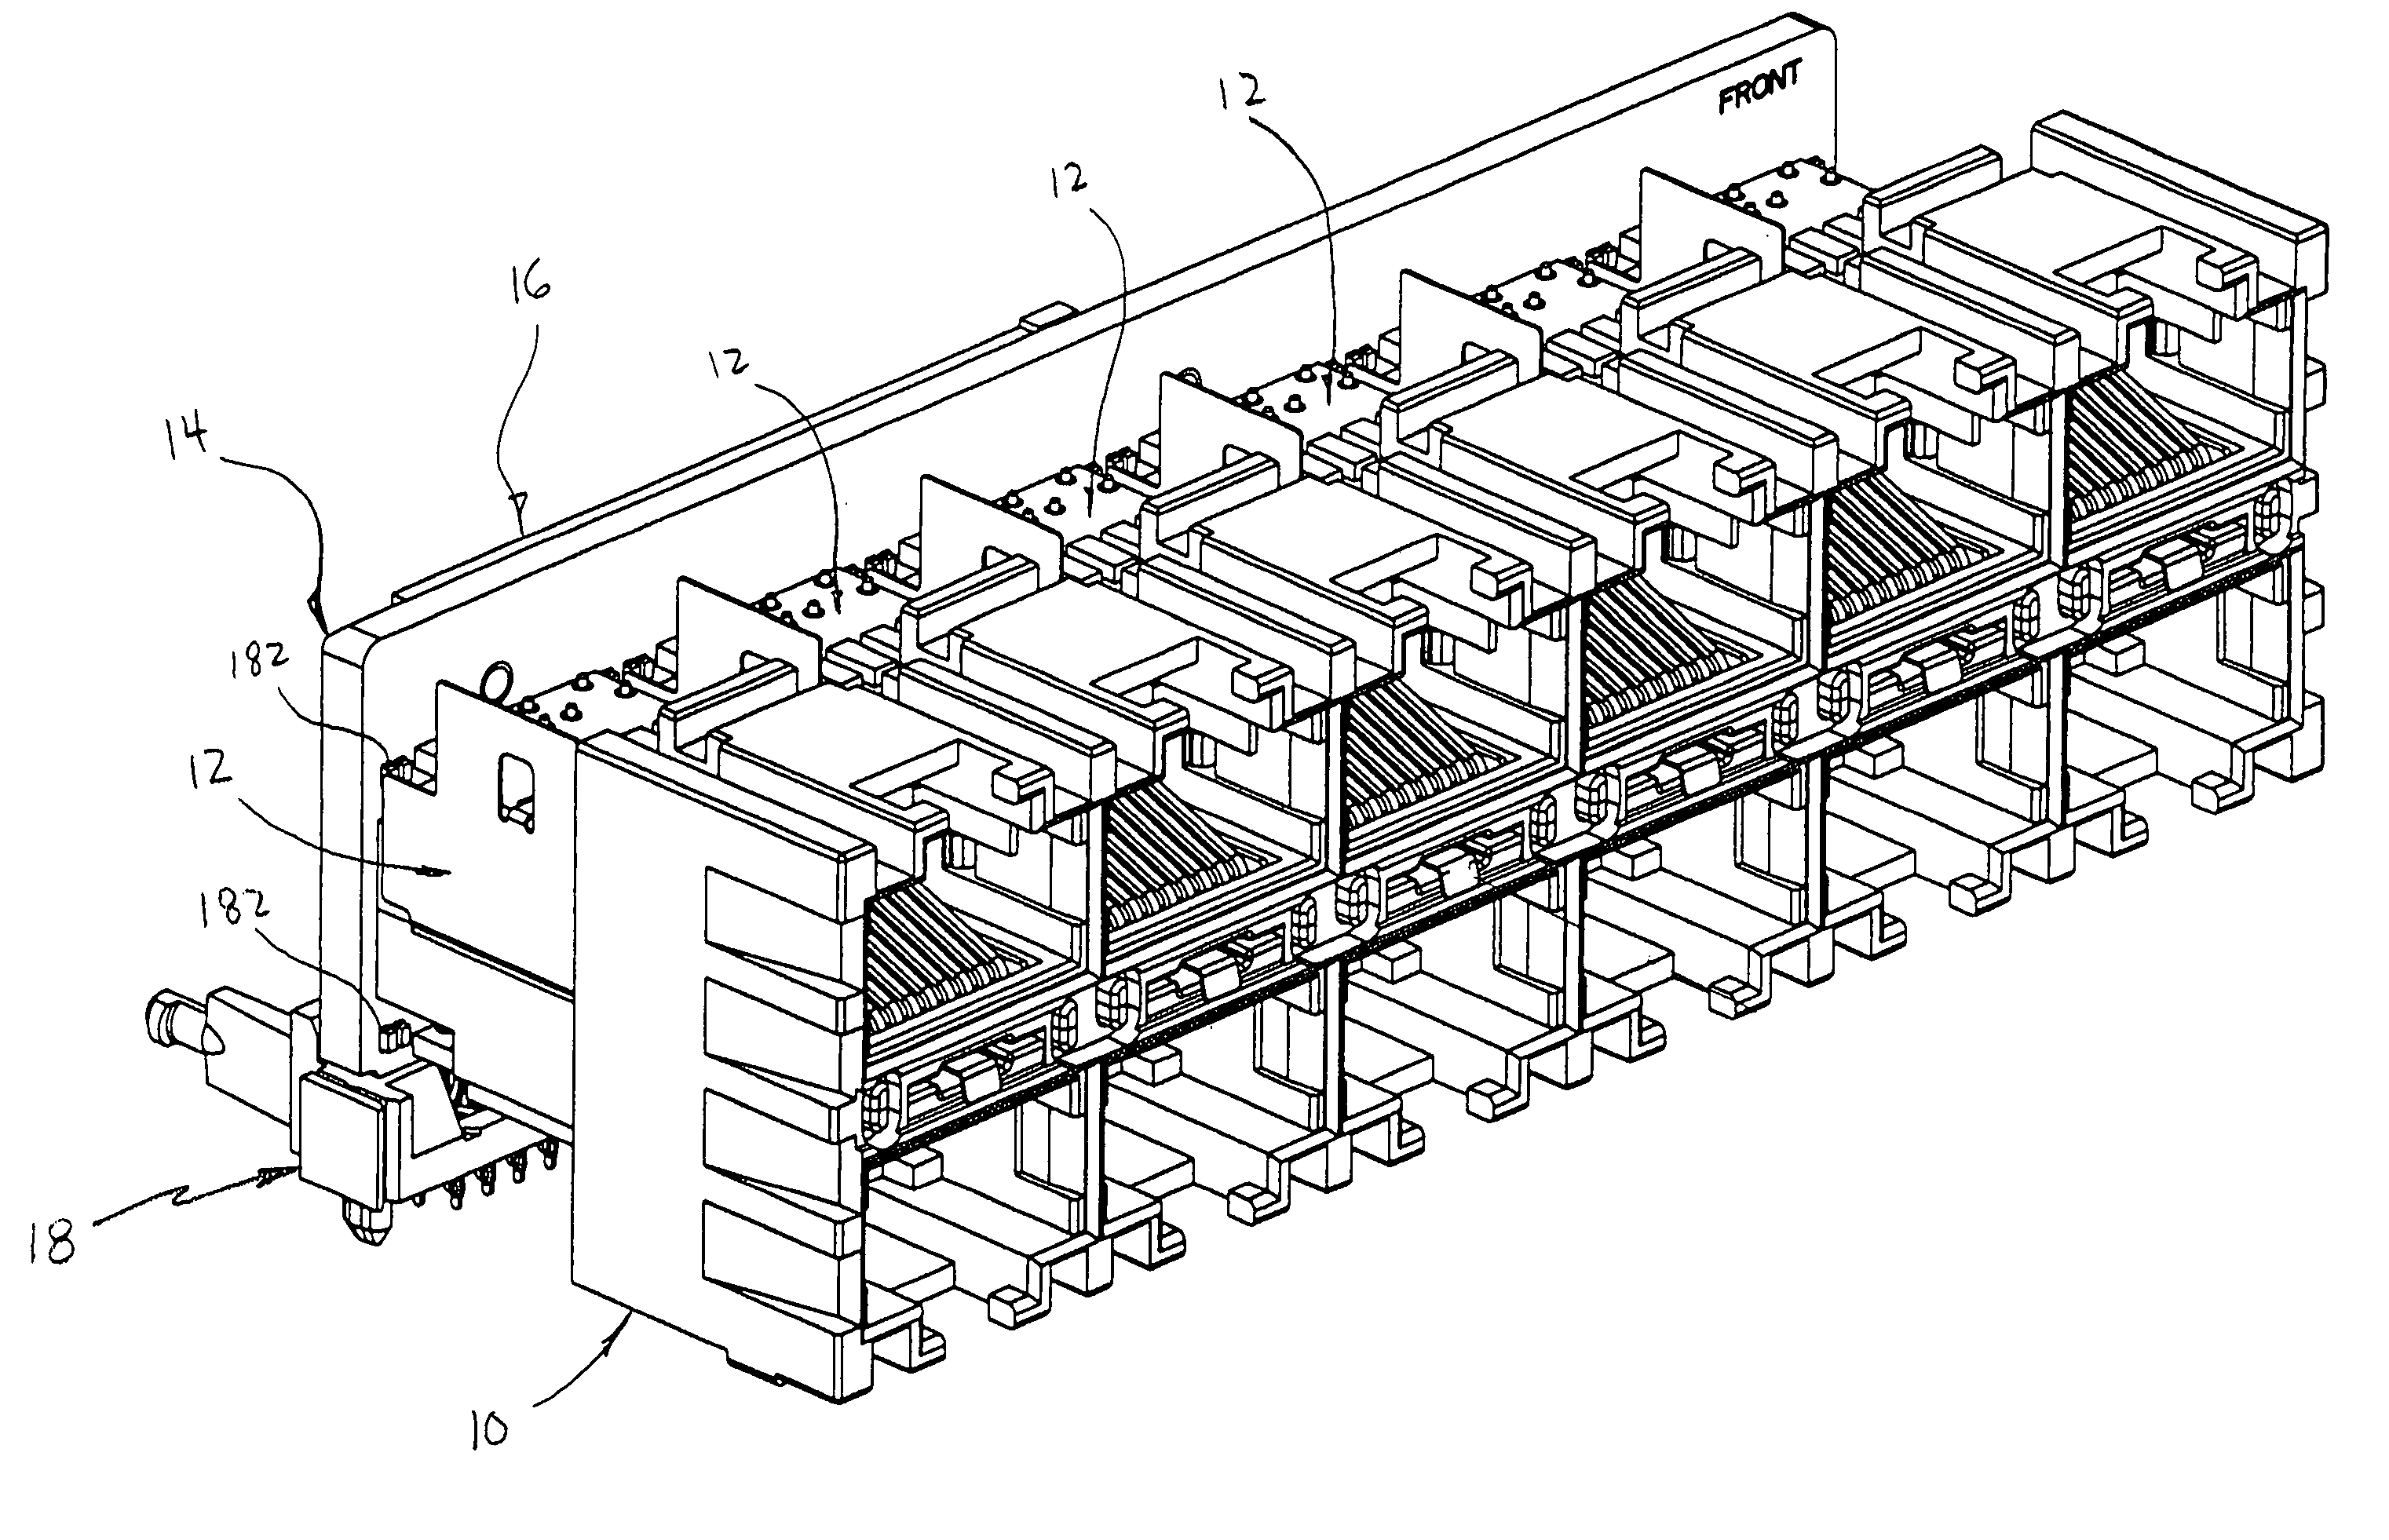 Shielding configuration for a multi-port jack assembly